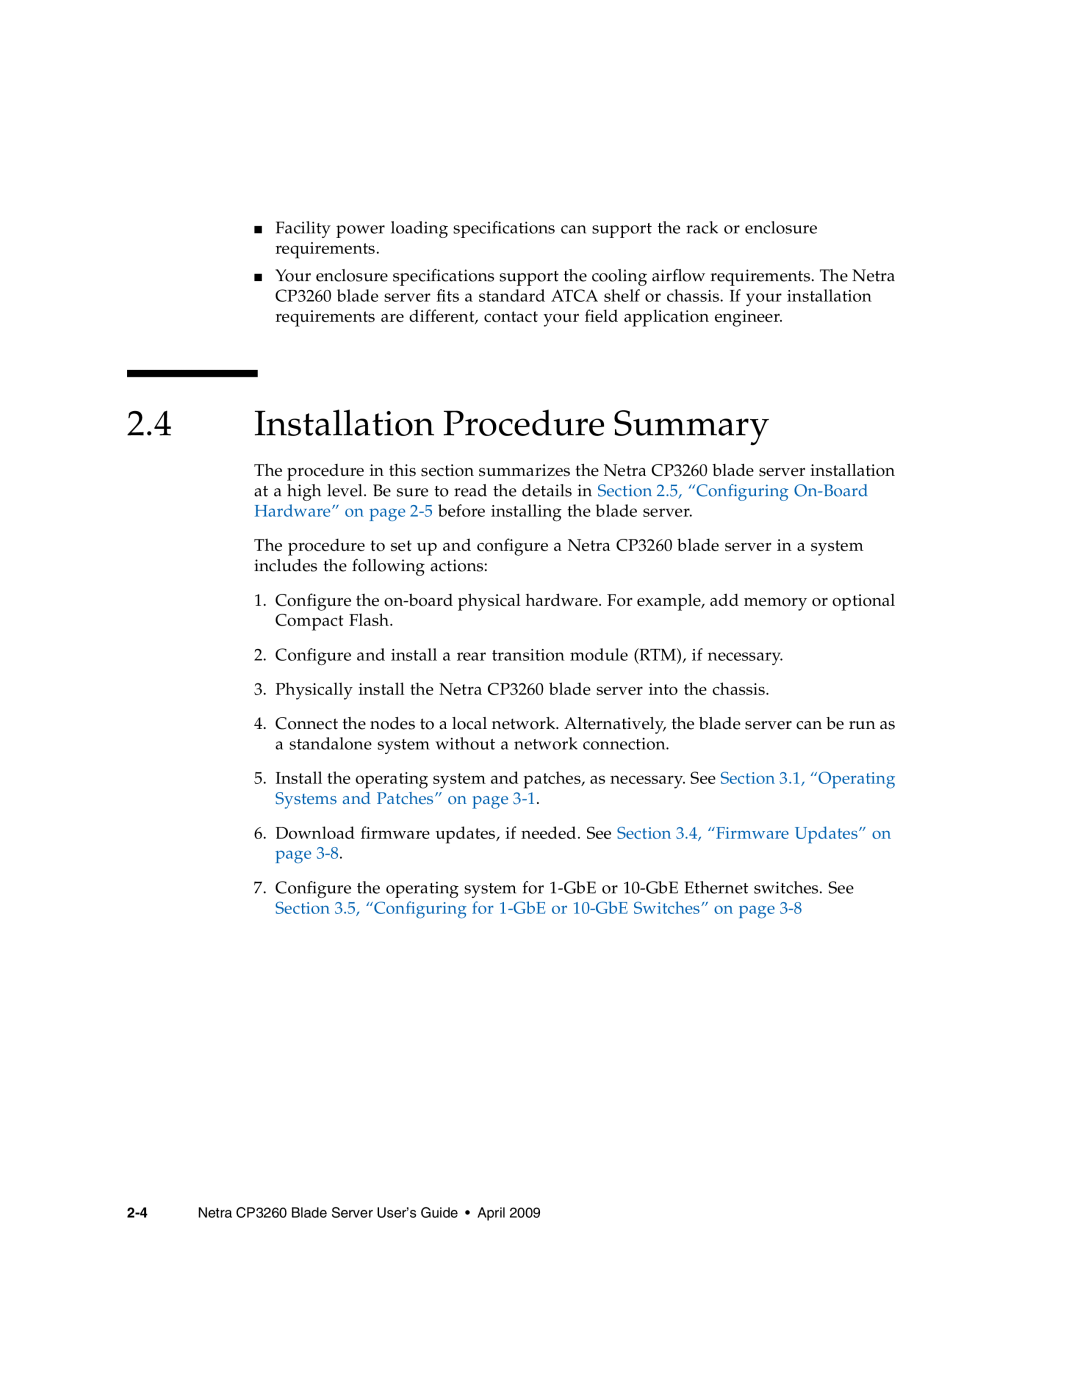 Sun Microsystems CP3260 manual Installation Procedure Summary 